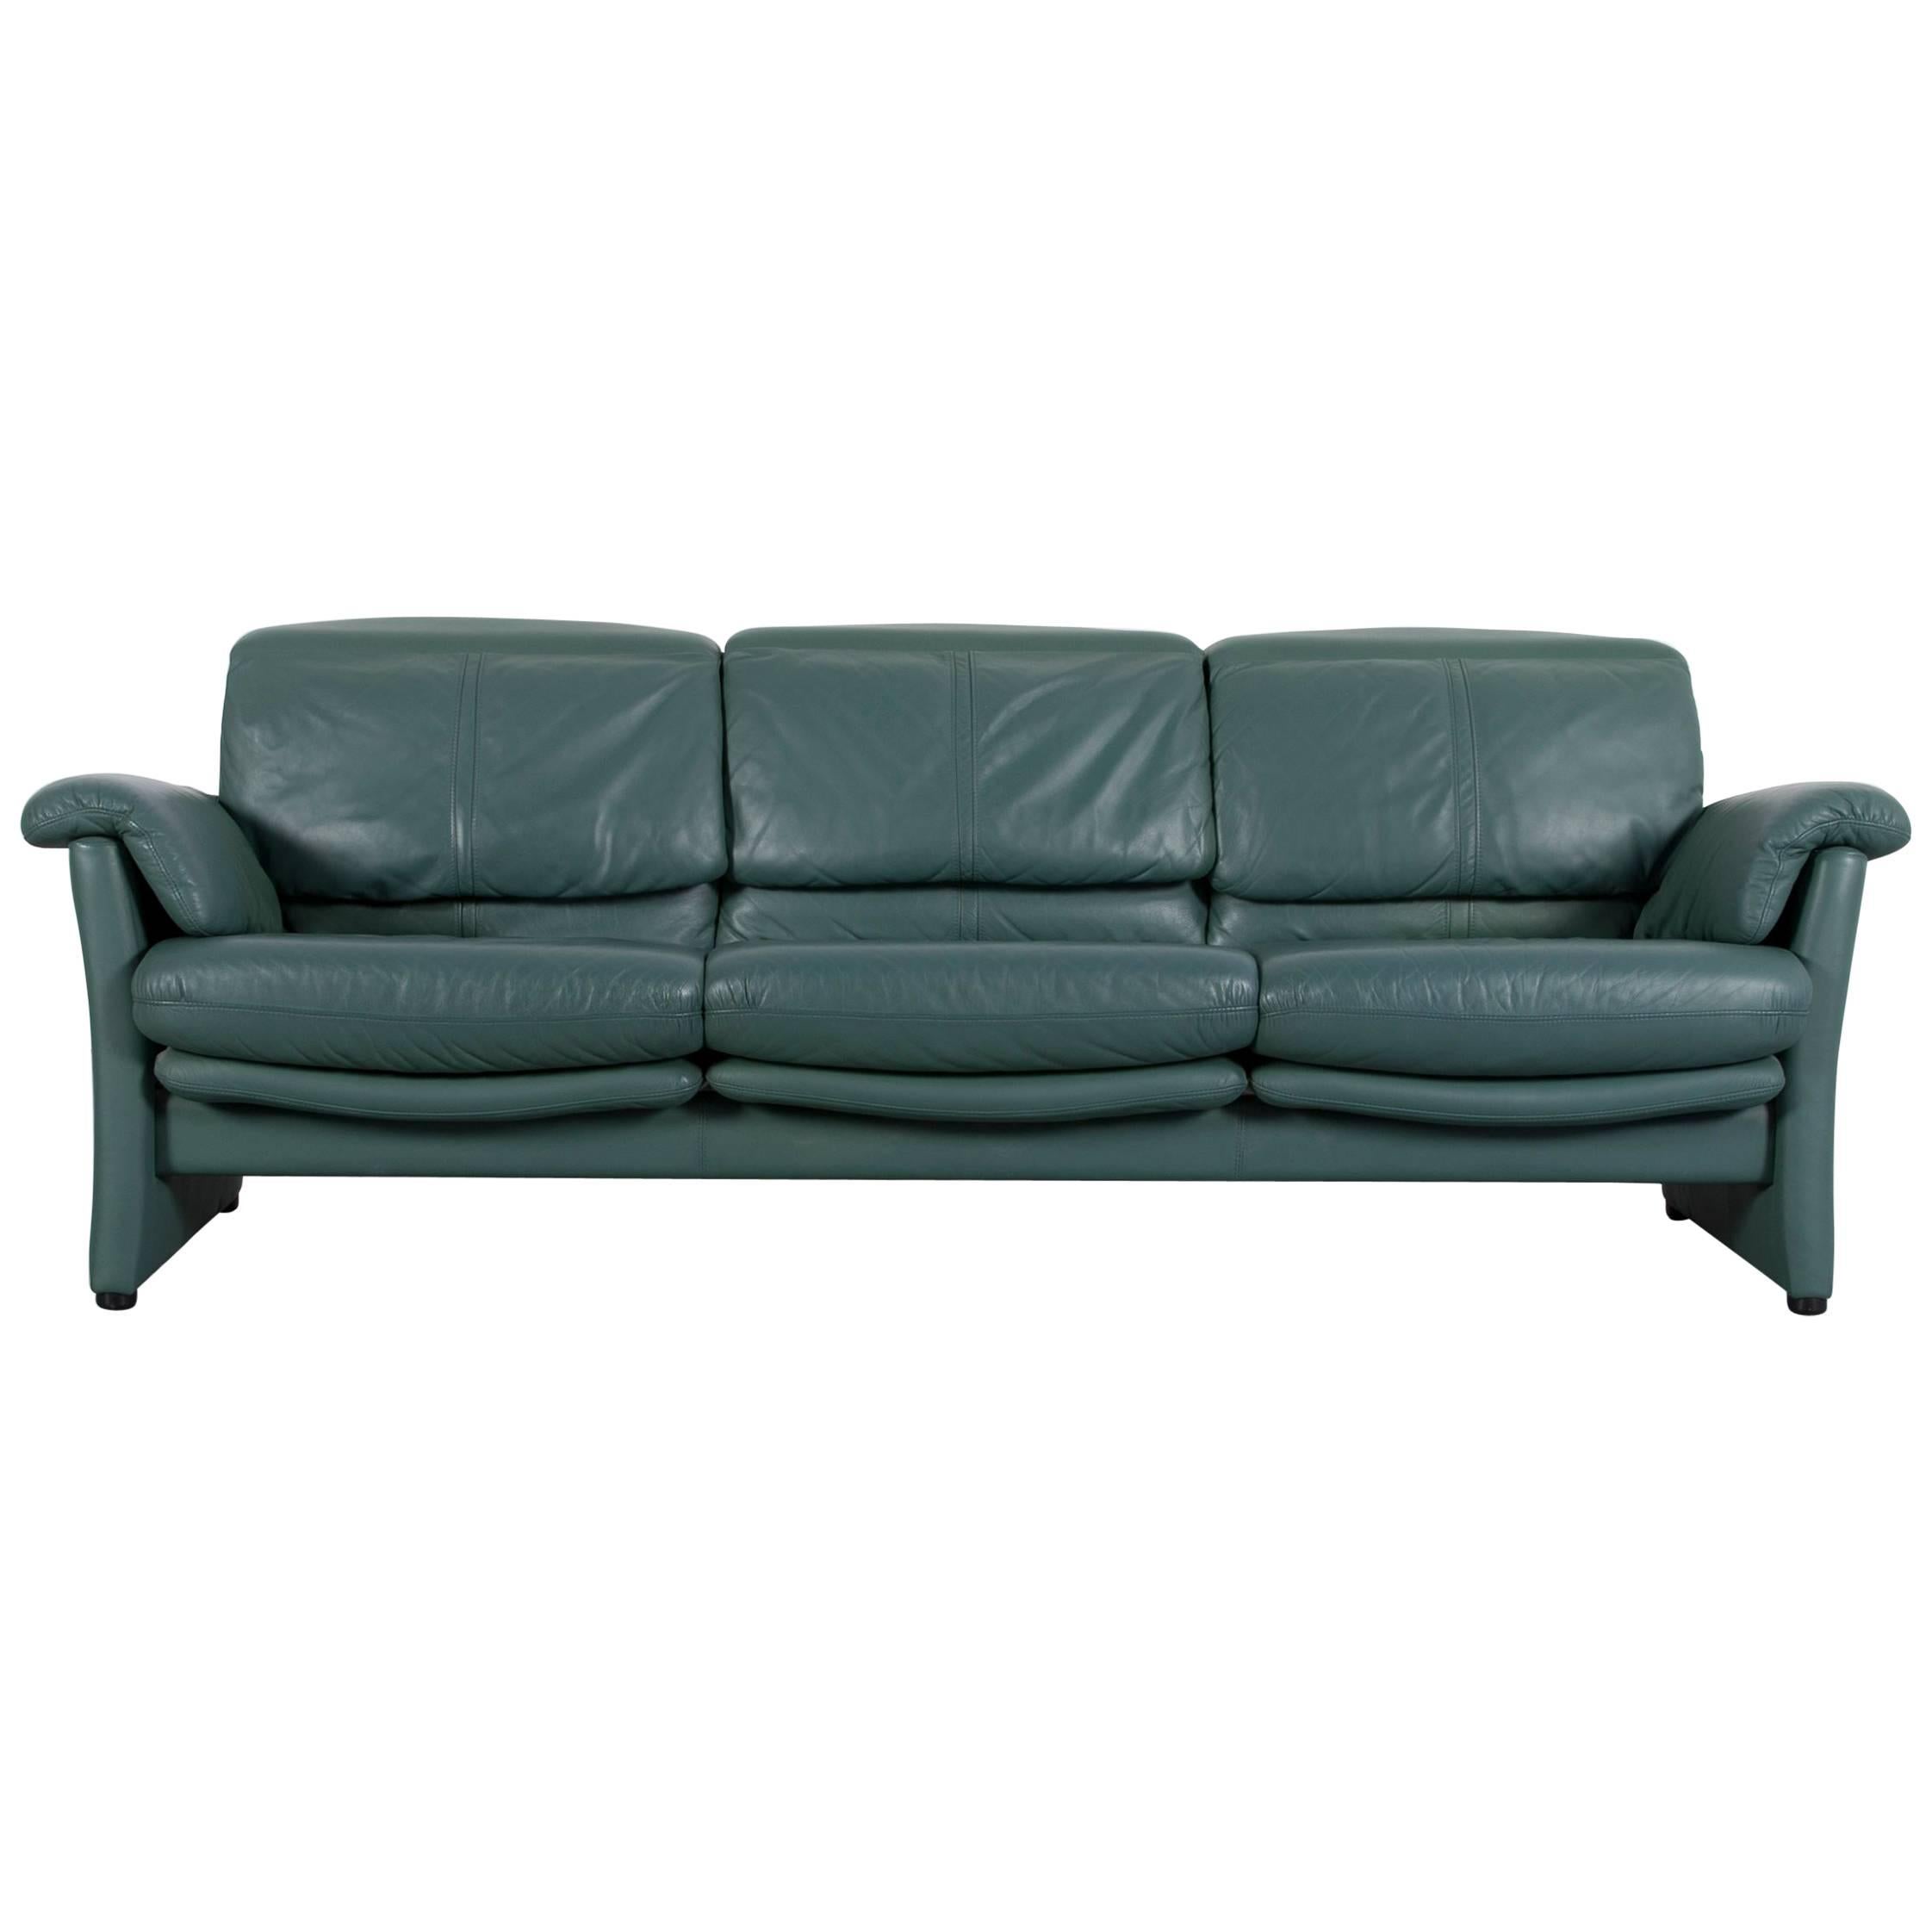 Ewald Schillig Leather Sofa Green Blue Three-Seat